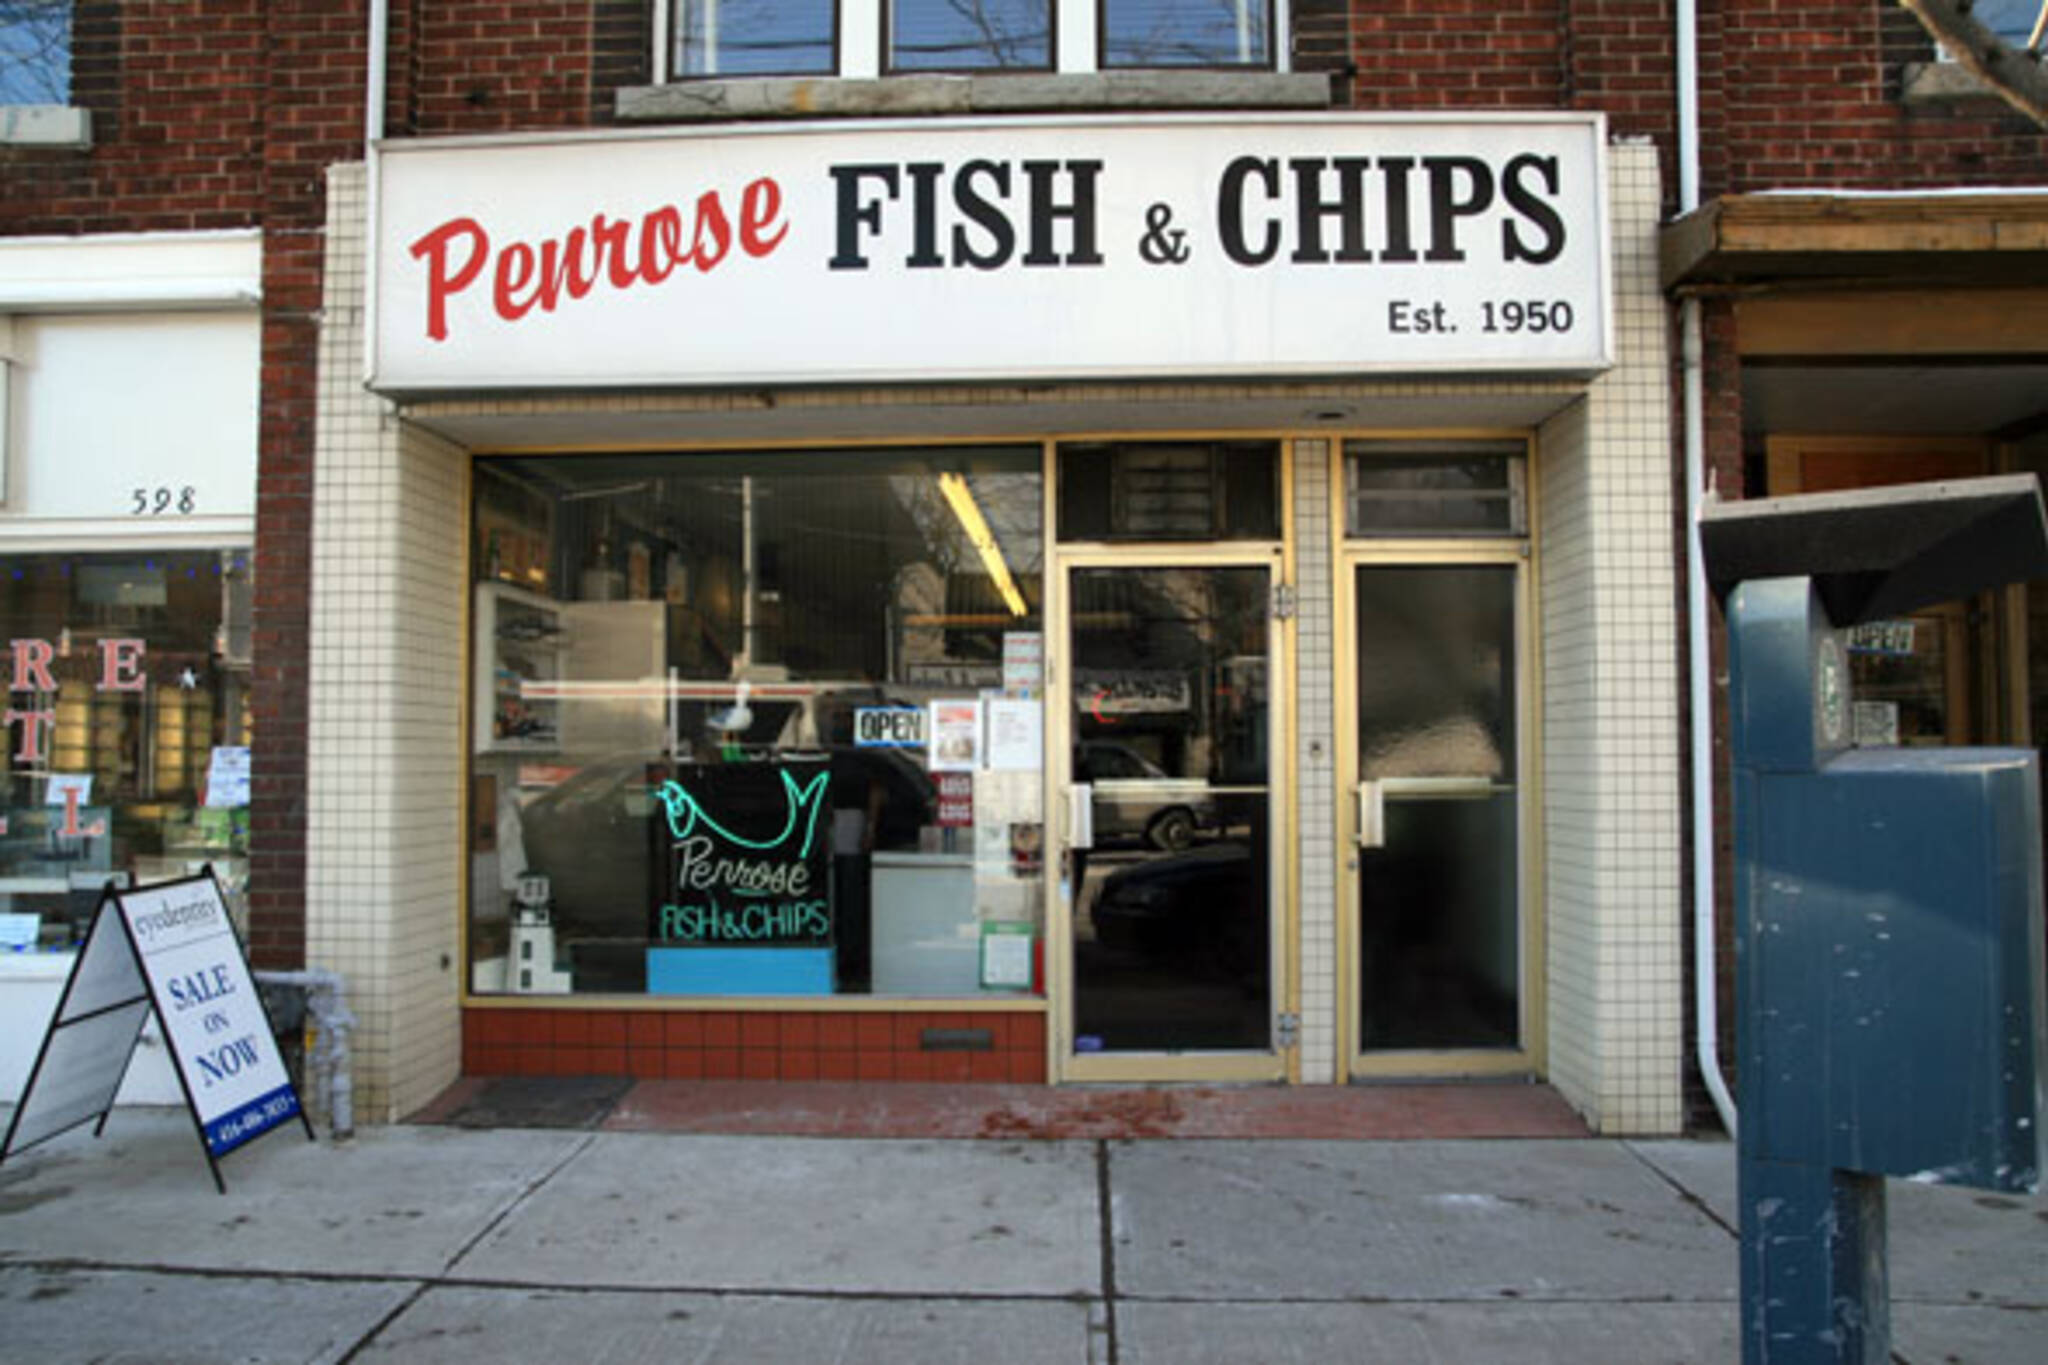 penrose fish chips